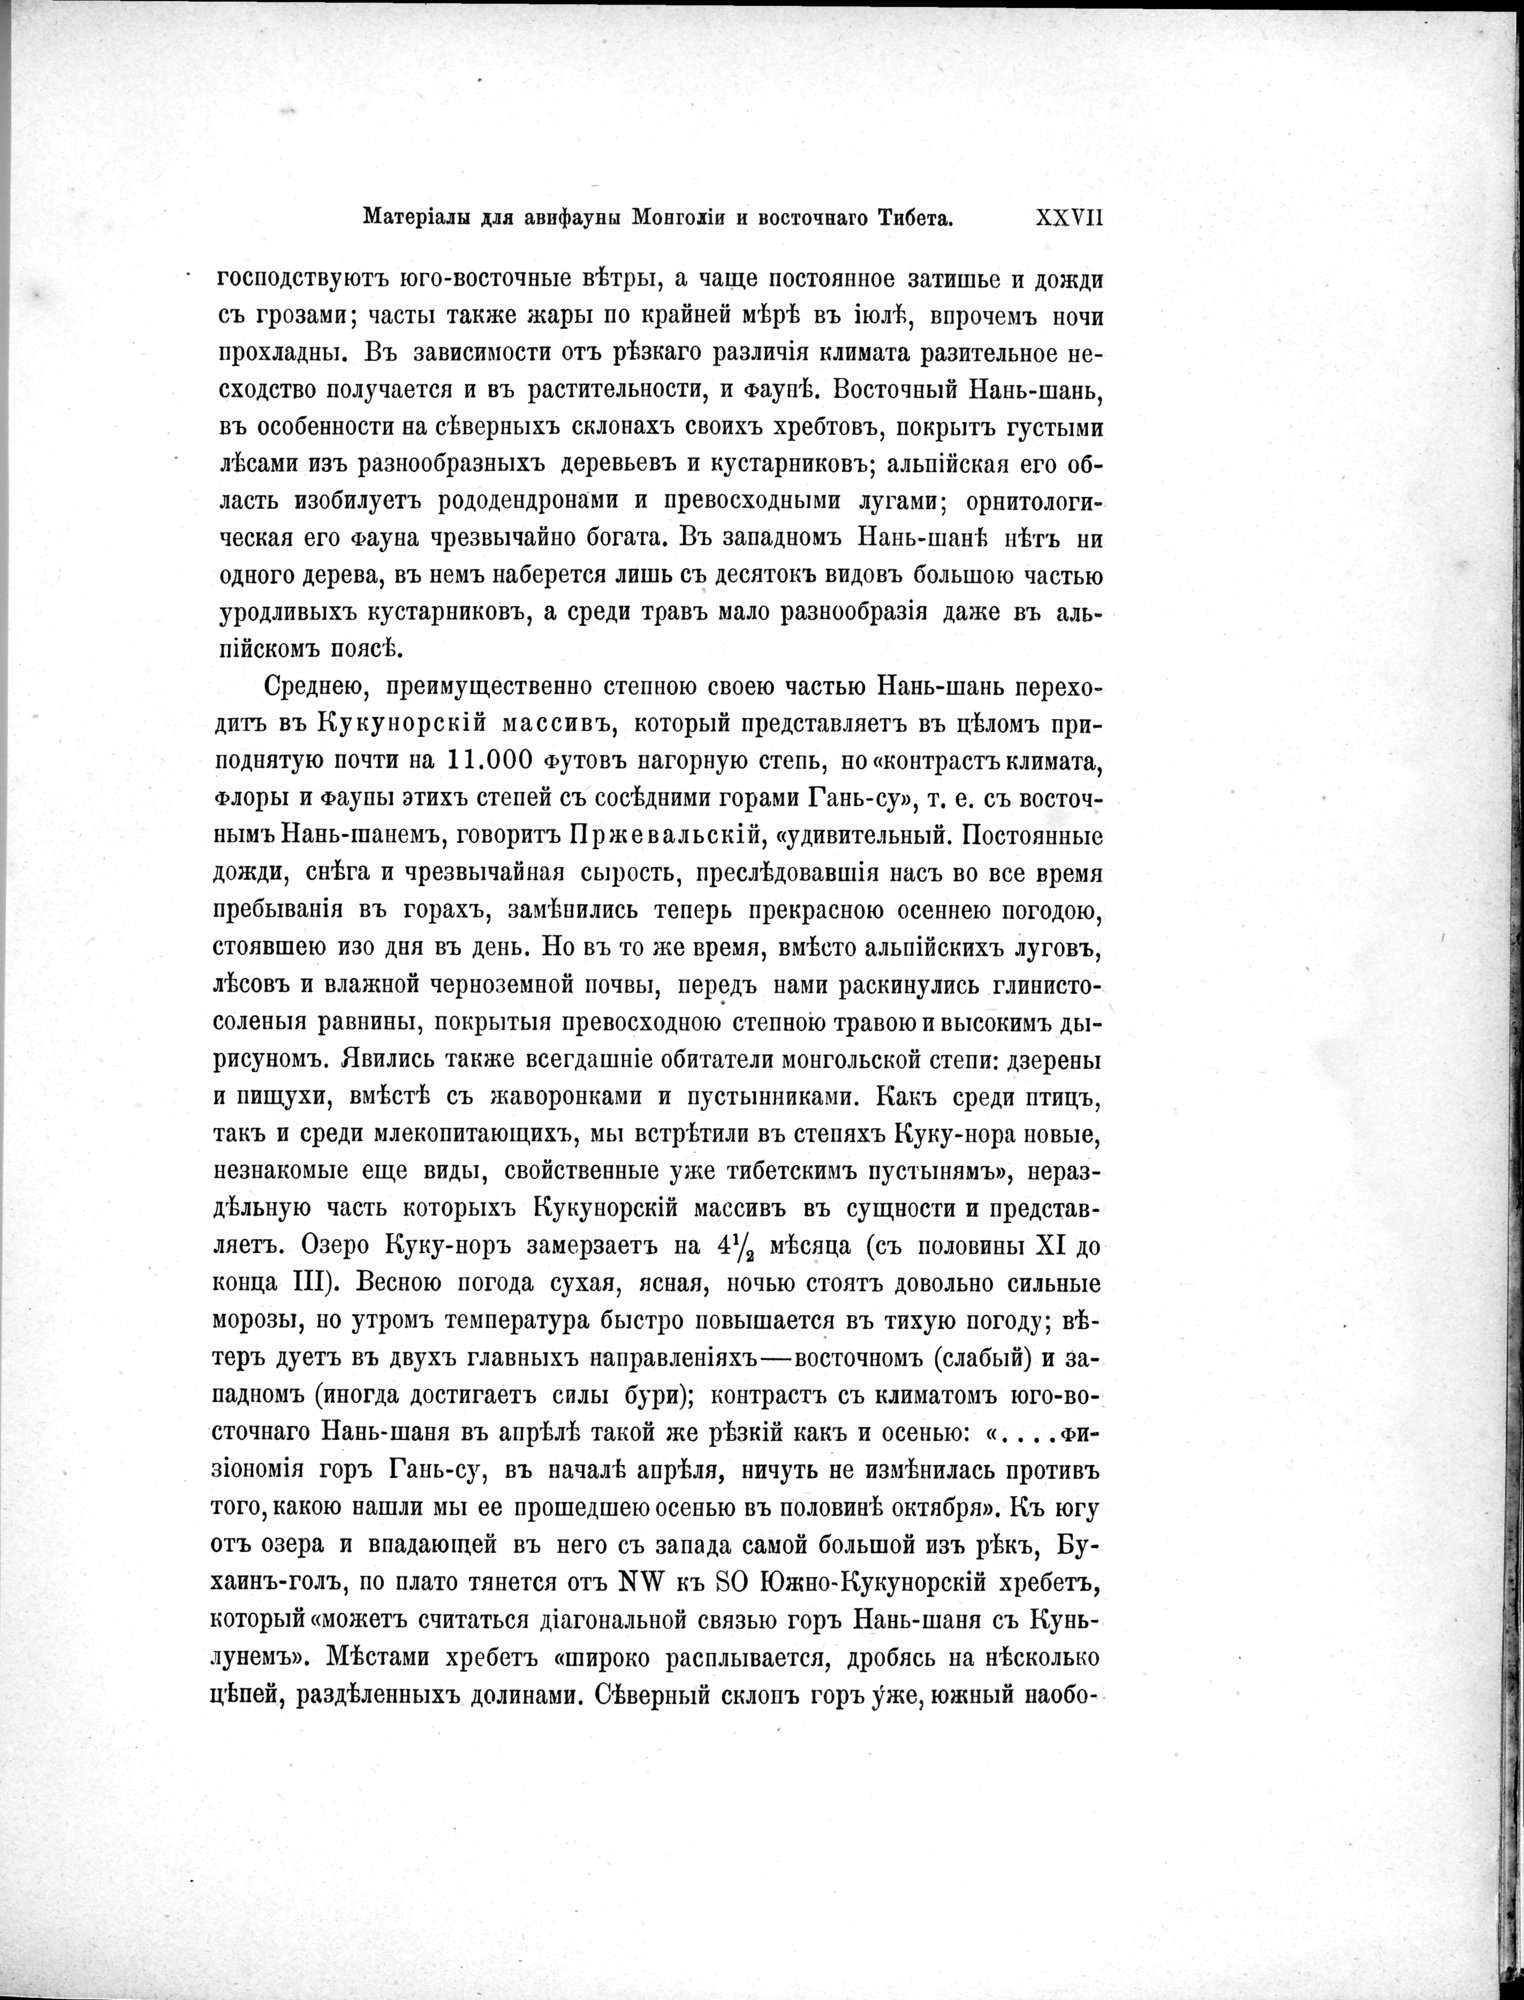 Mongoliia i Kam : vol.5 / Page 41 (Grayscale High Resolution Image)